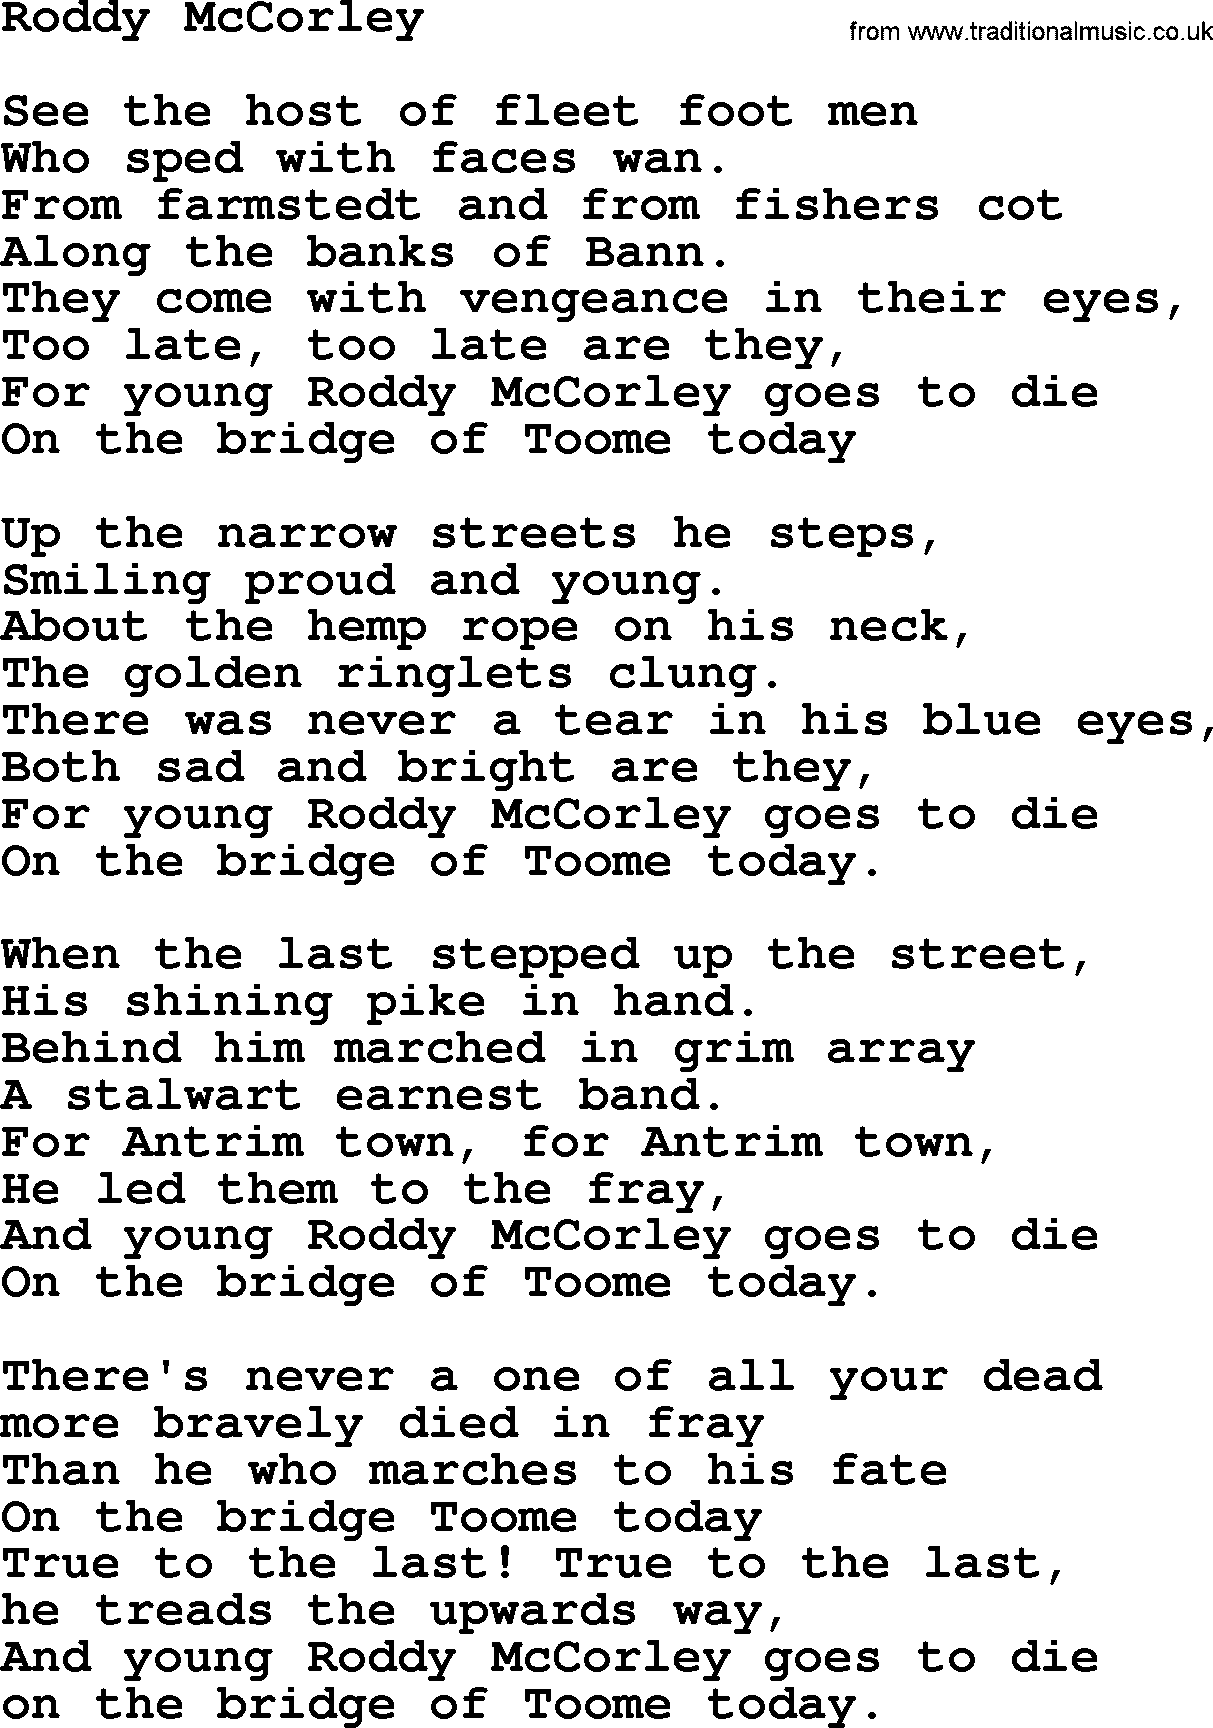 The Dubliners song: Roddy Mccorley, lyrics